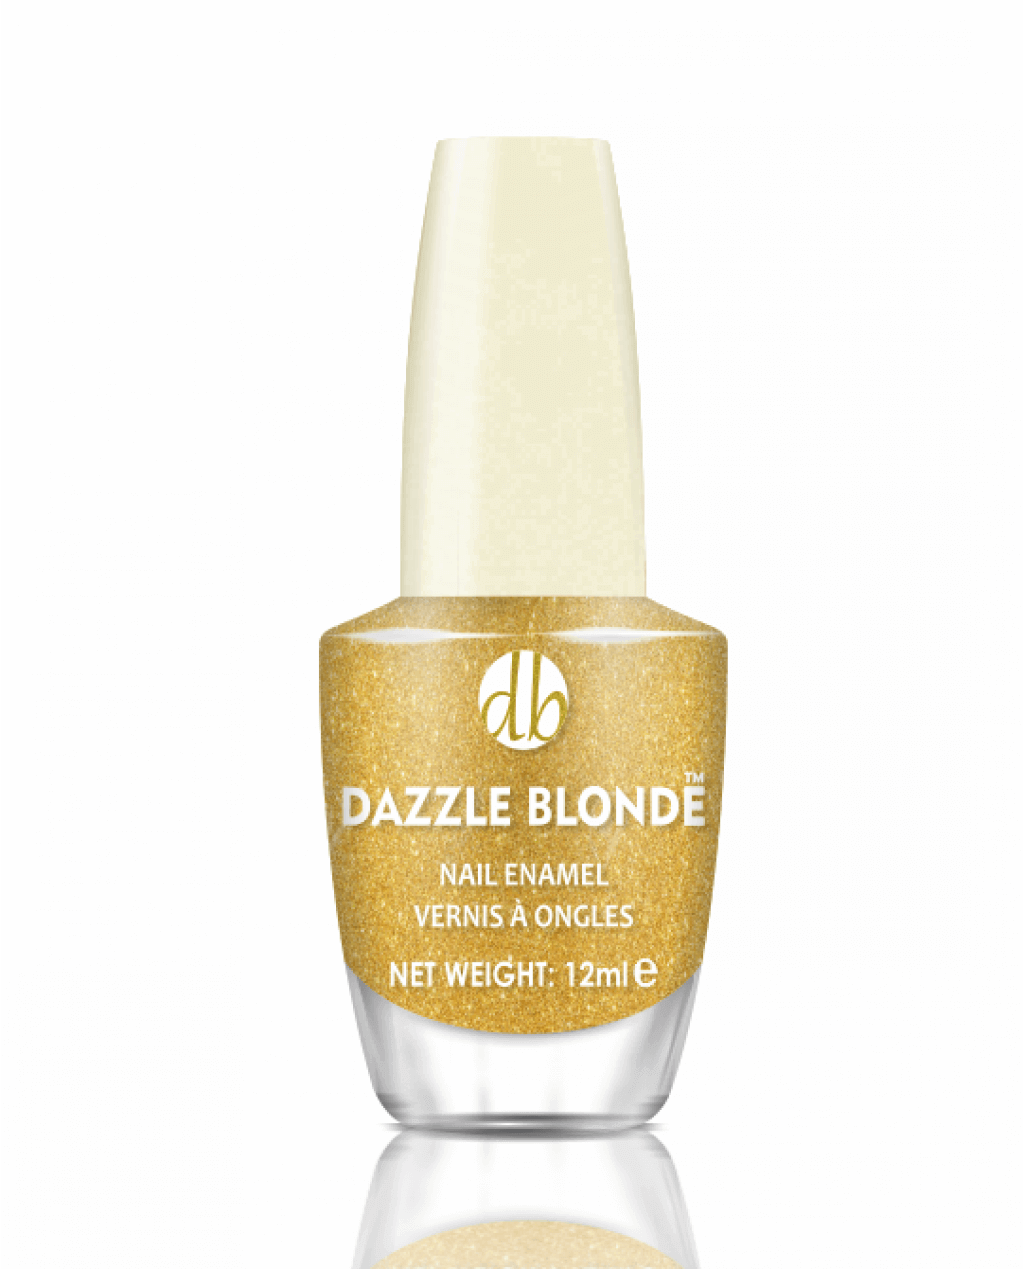 METALLIC GOLD Nail Polish by Dazzle Blonde